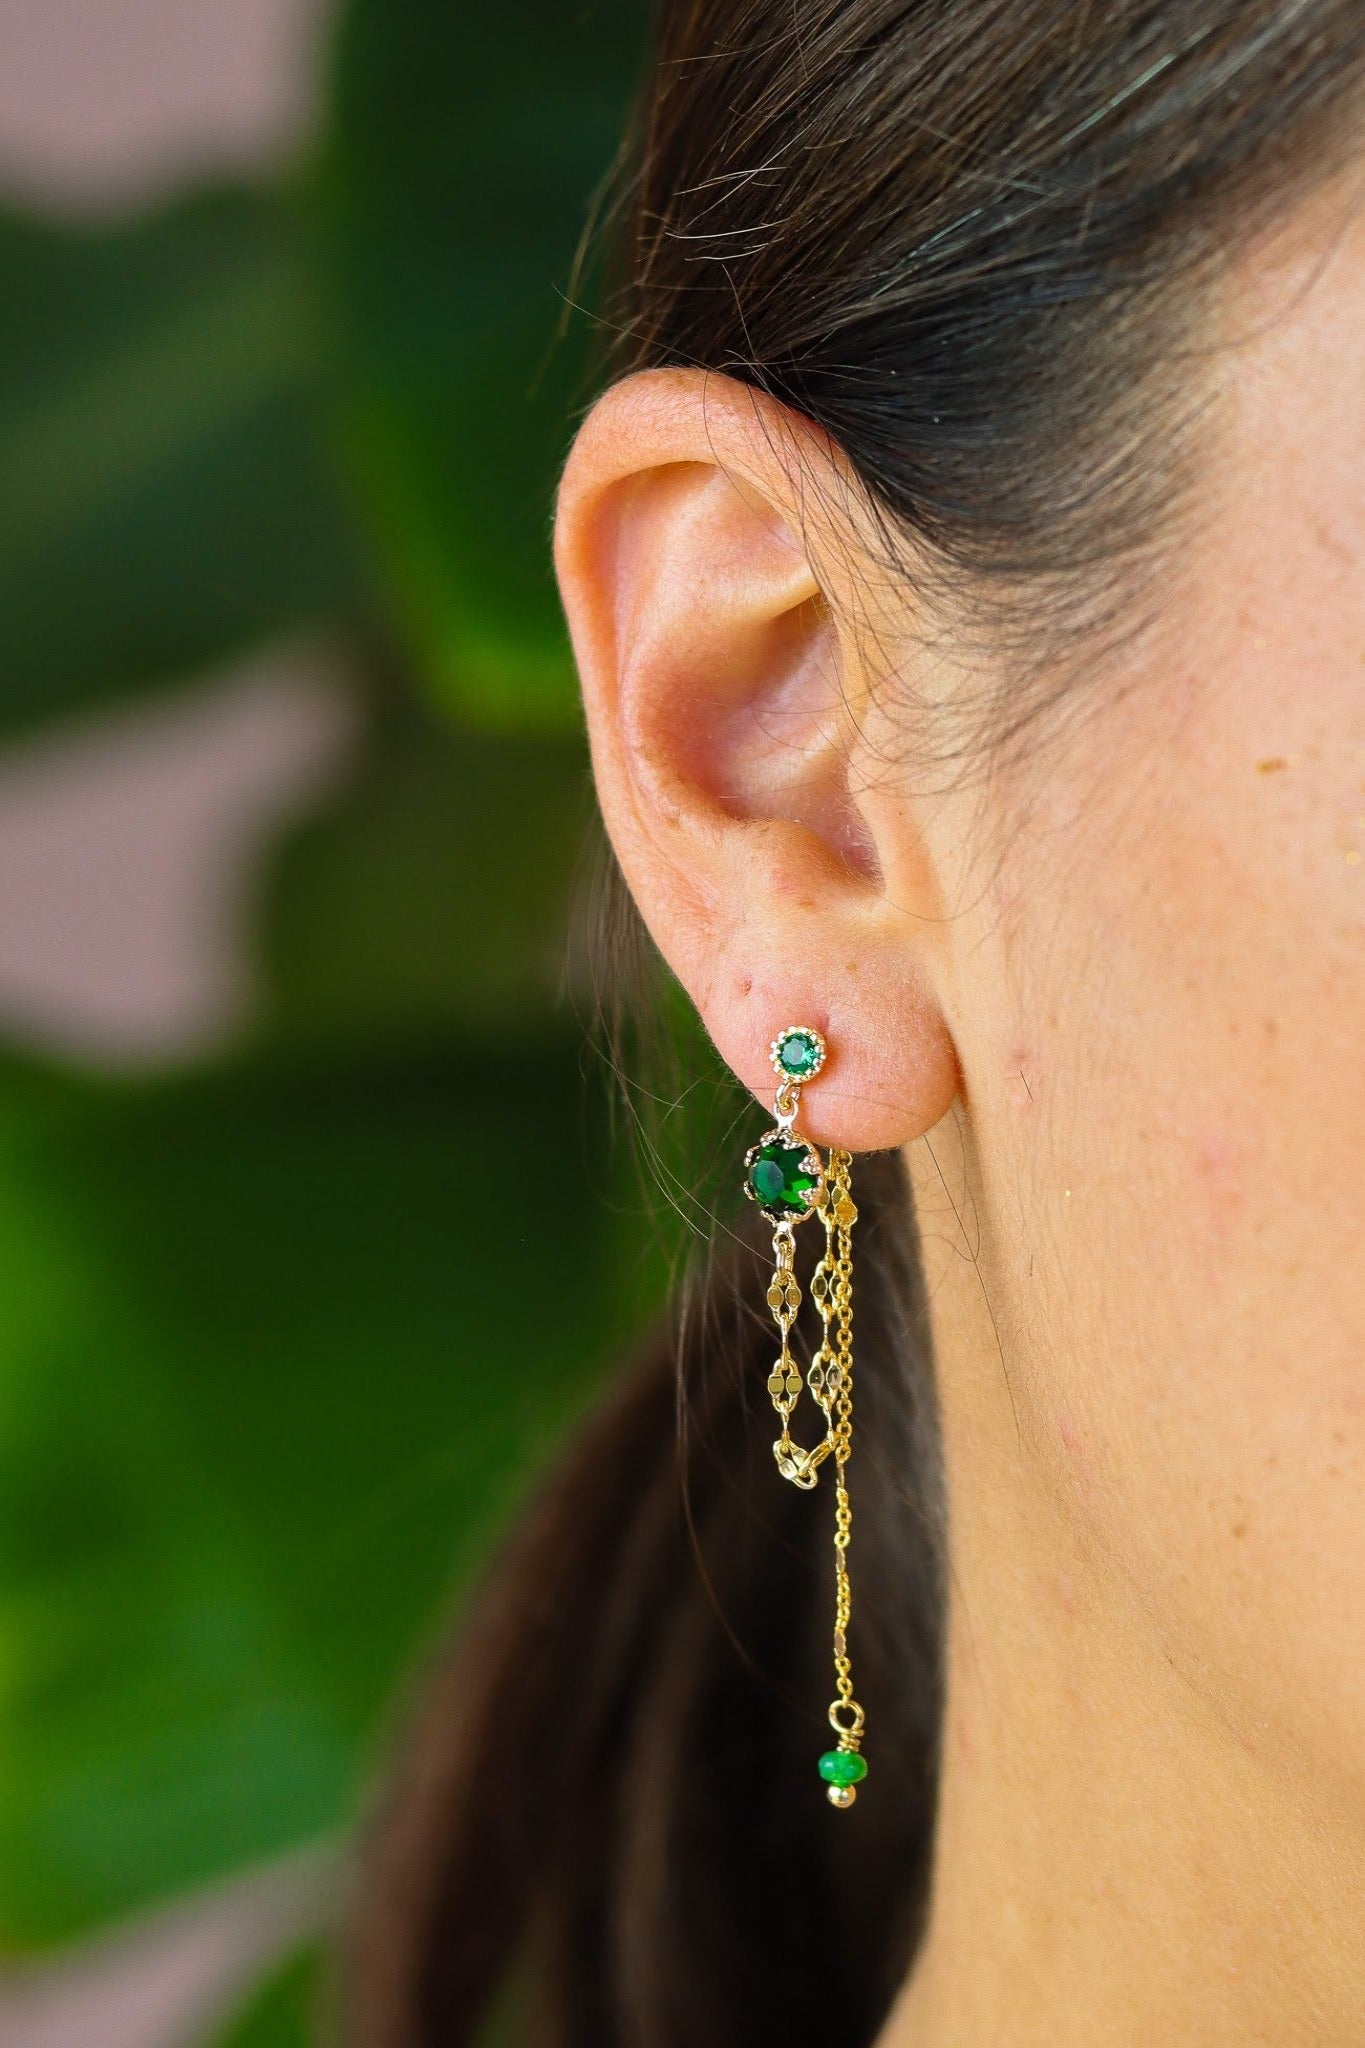 Stay Gold by Mme Bovary Fluorite linked stud earrings